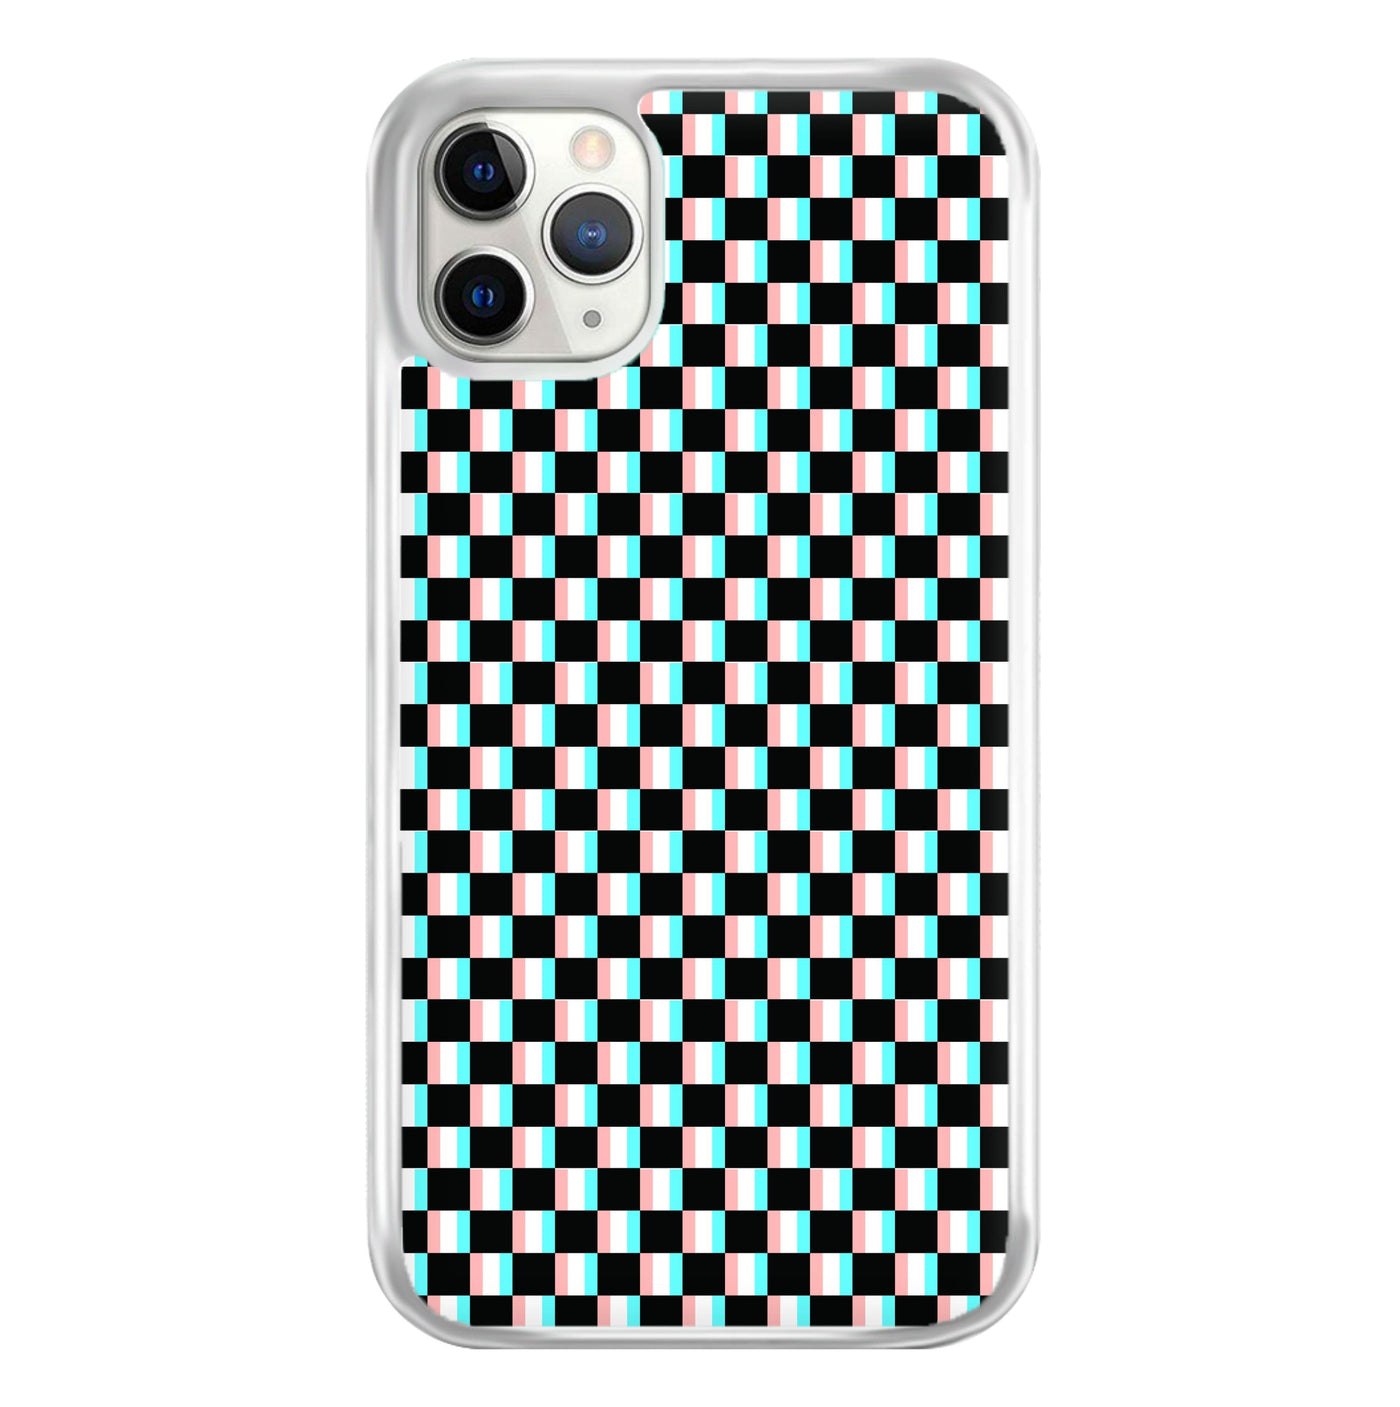 3D Squares - Trippy Patterns Phone Case